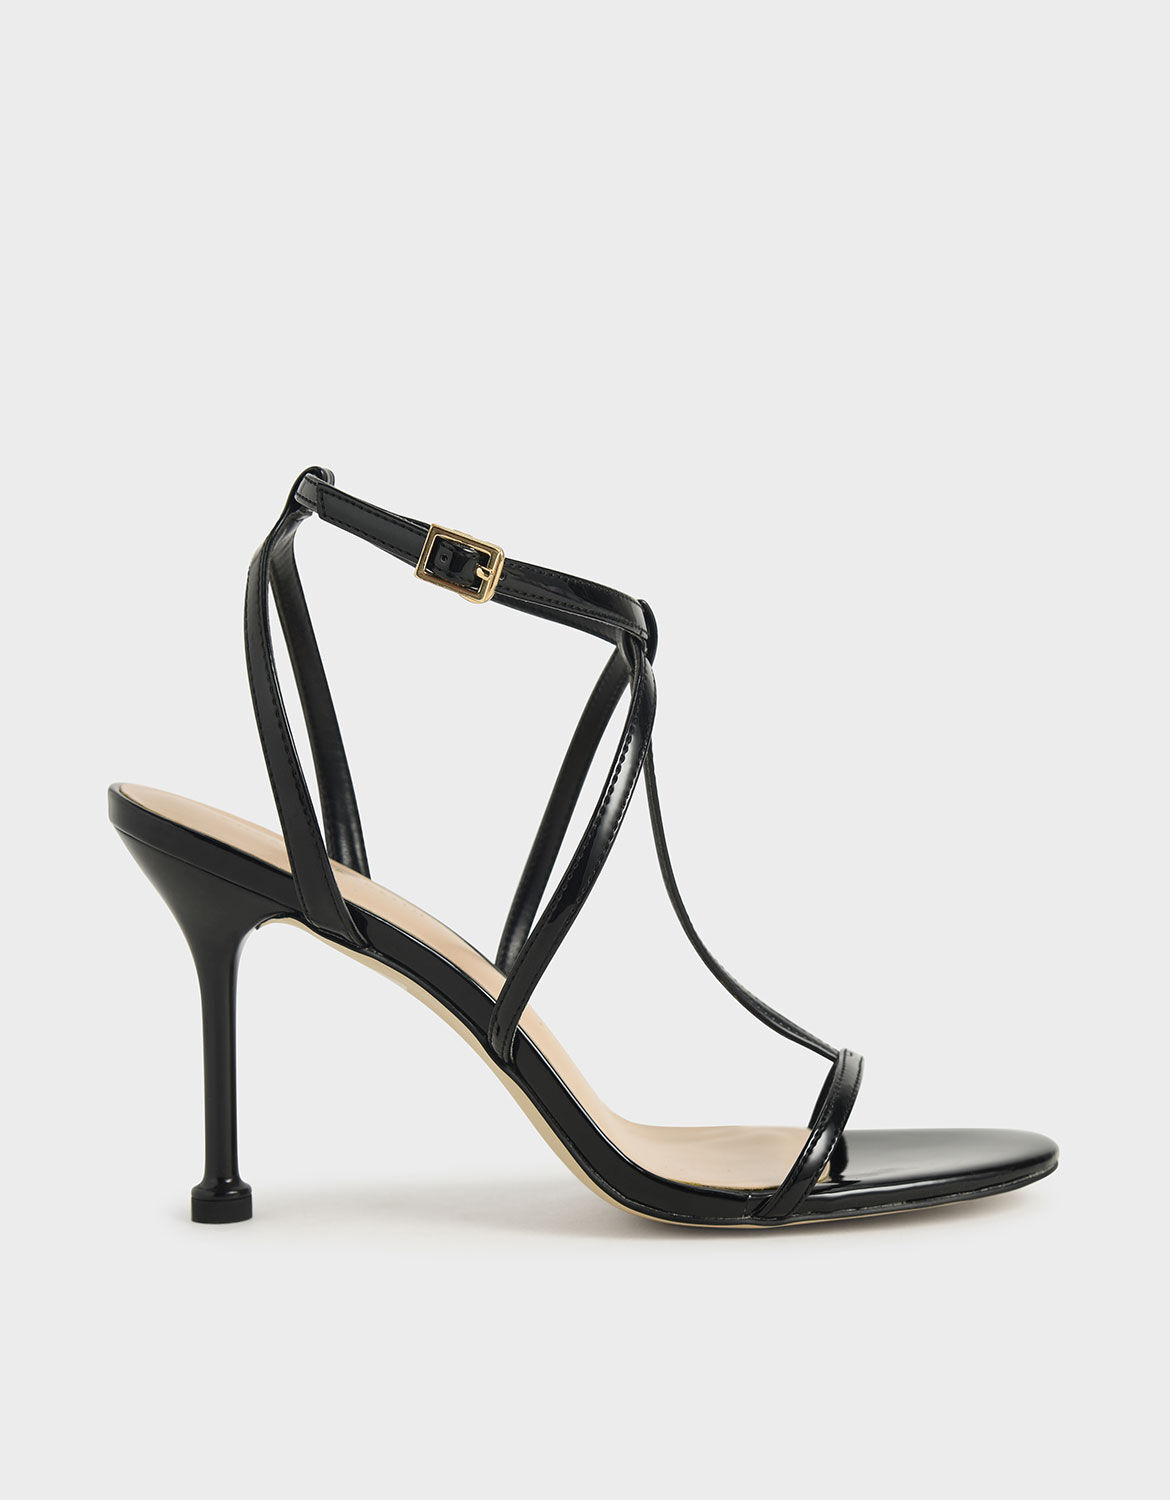 black strappy high heels